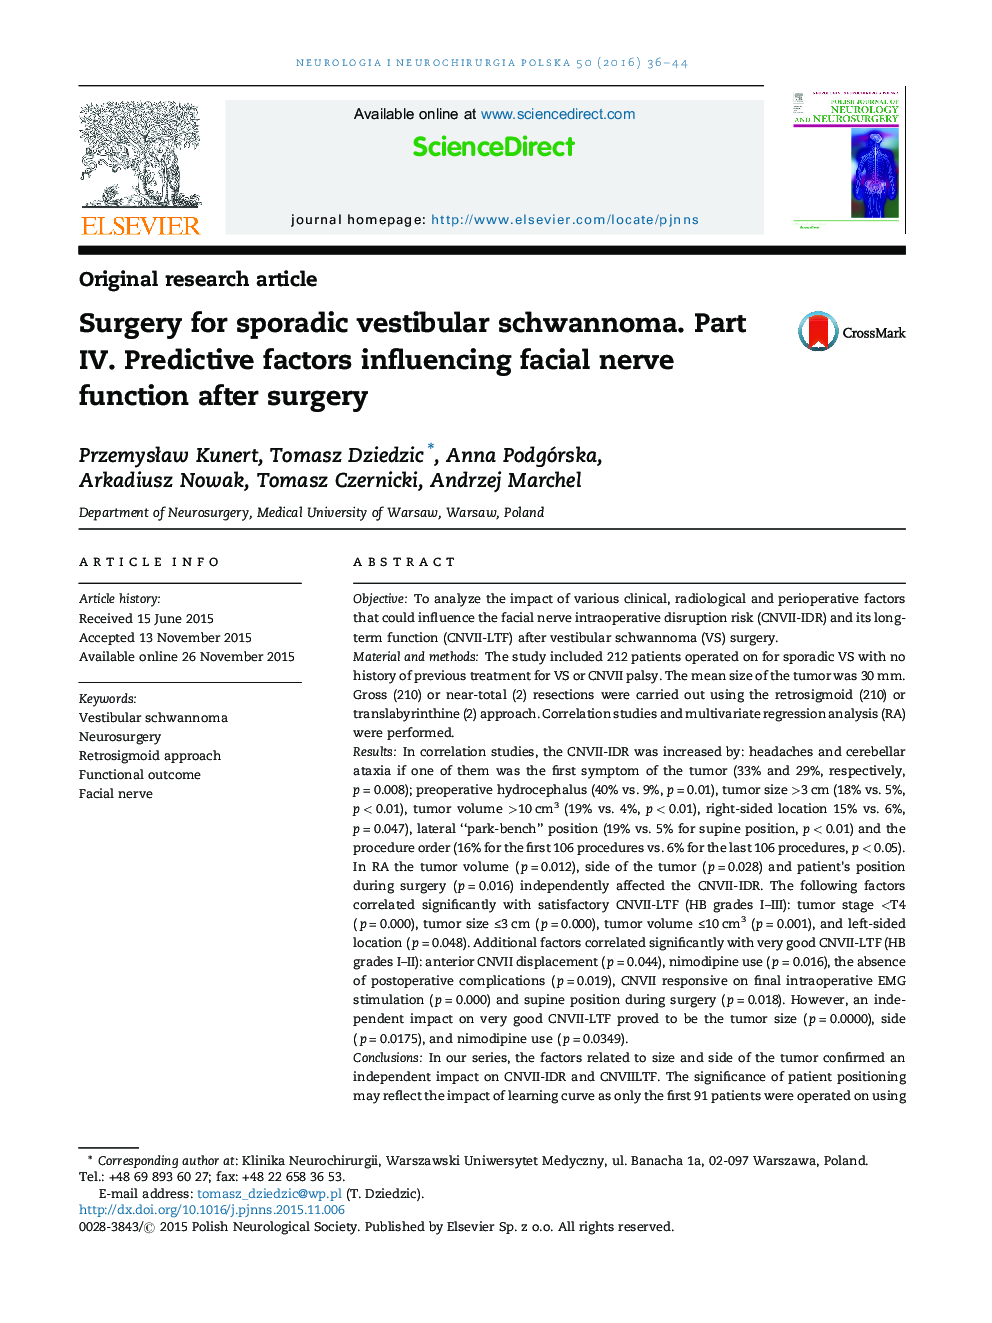 Surgery for sporadic vestibular schwannoma. Part IV. Predictive factors influencing facial nerve function after surgery